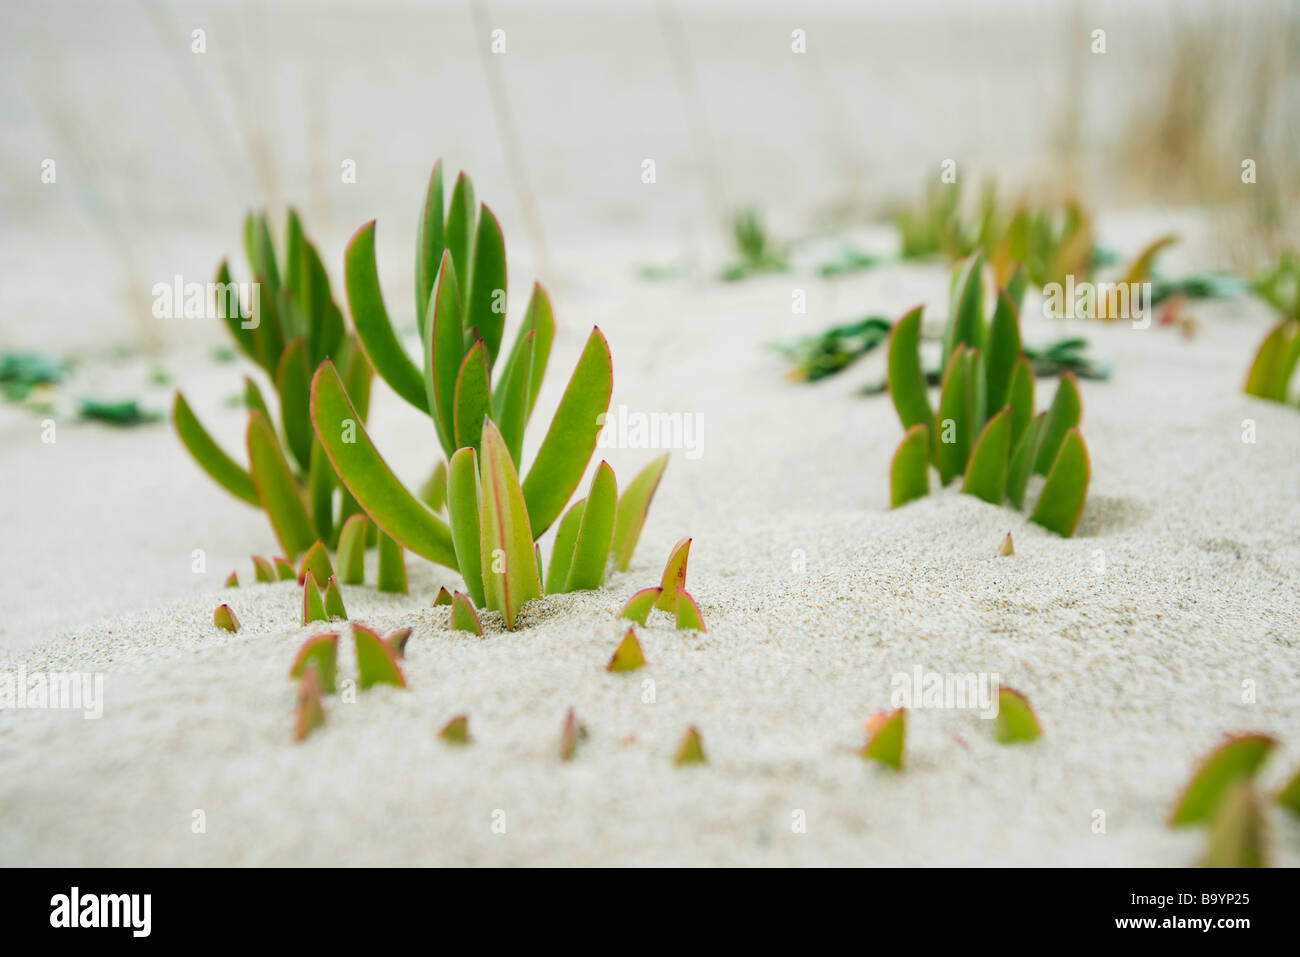 Sukkulente Pflanzen wächst in sand Stockfotografie - Alamy